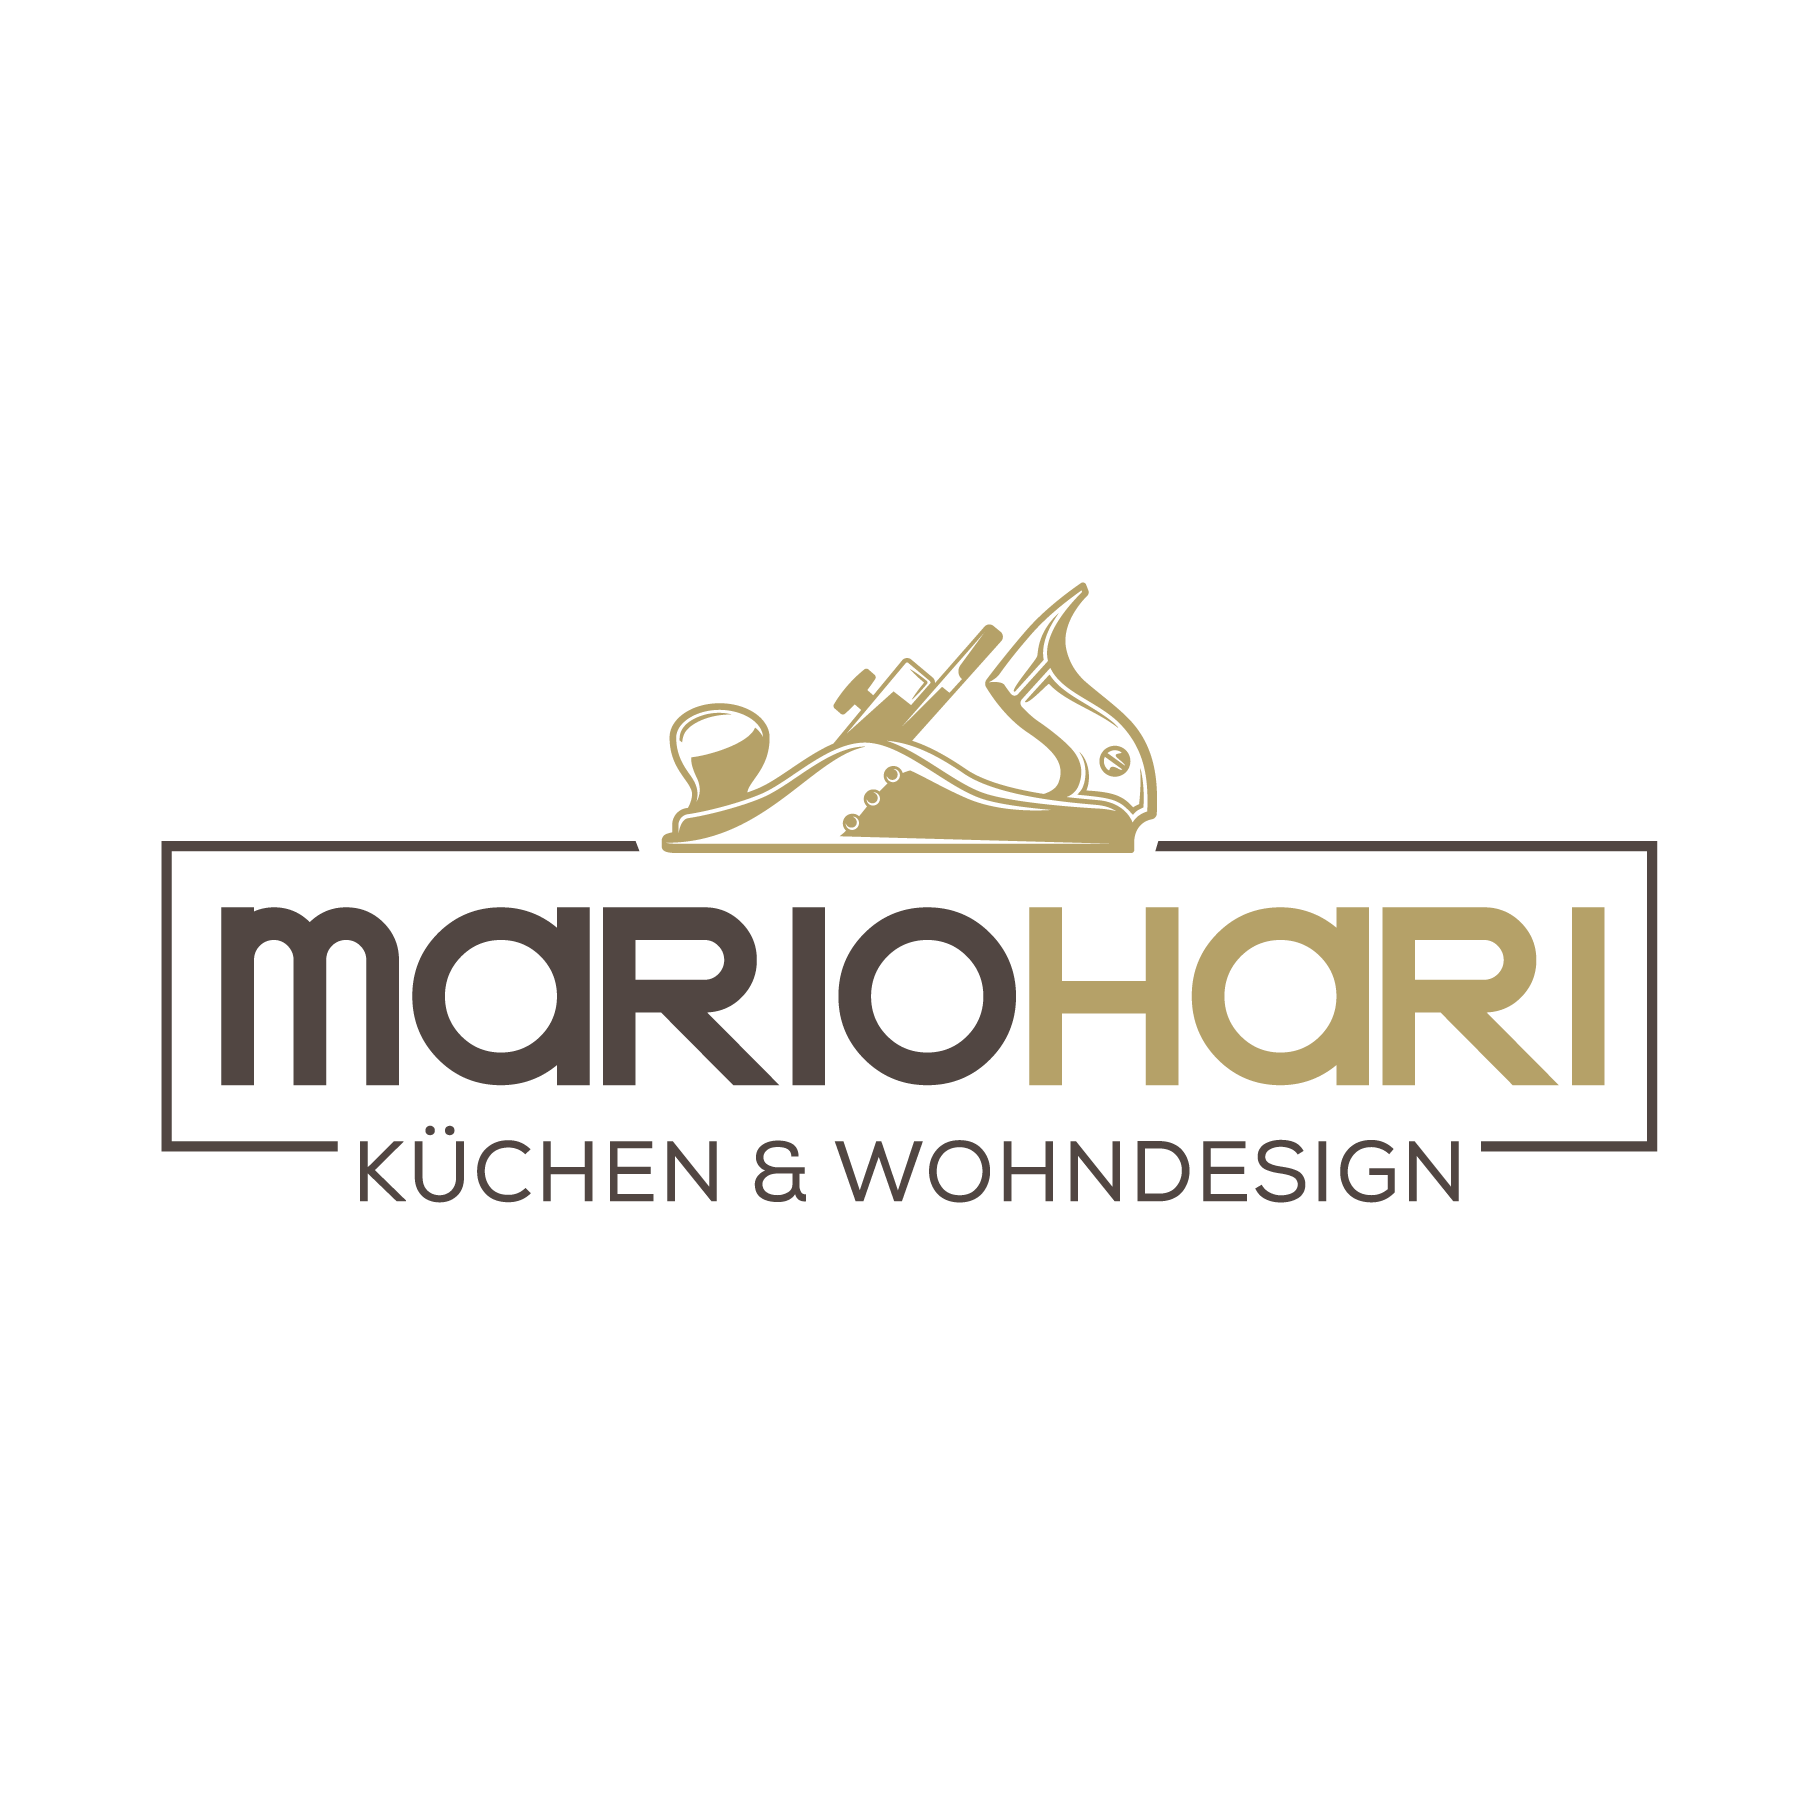 Mario Hari Küchen & Wohndesign